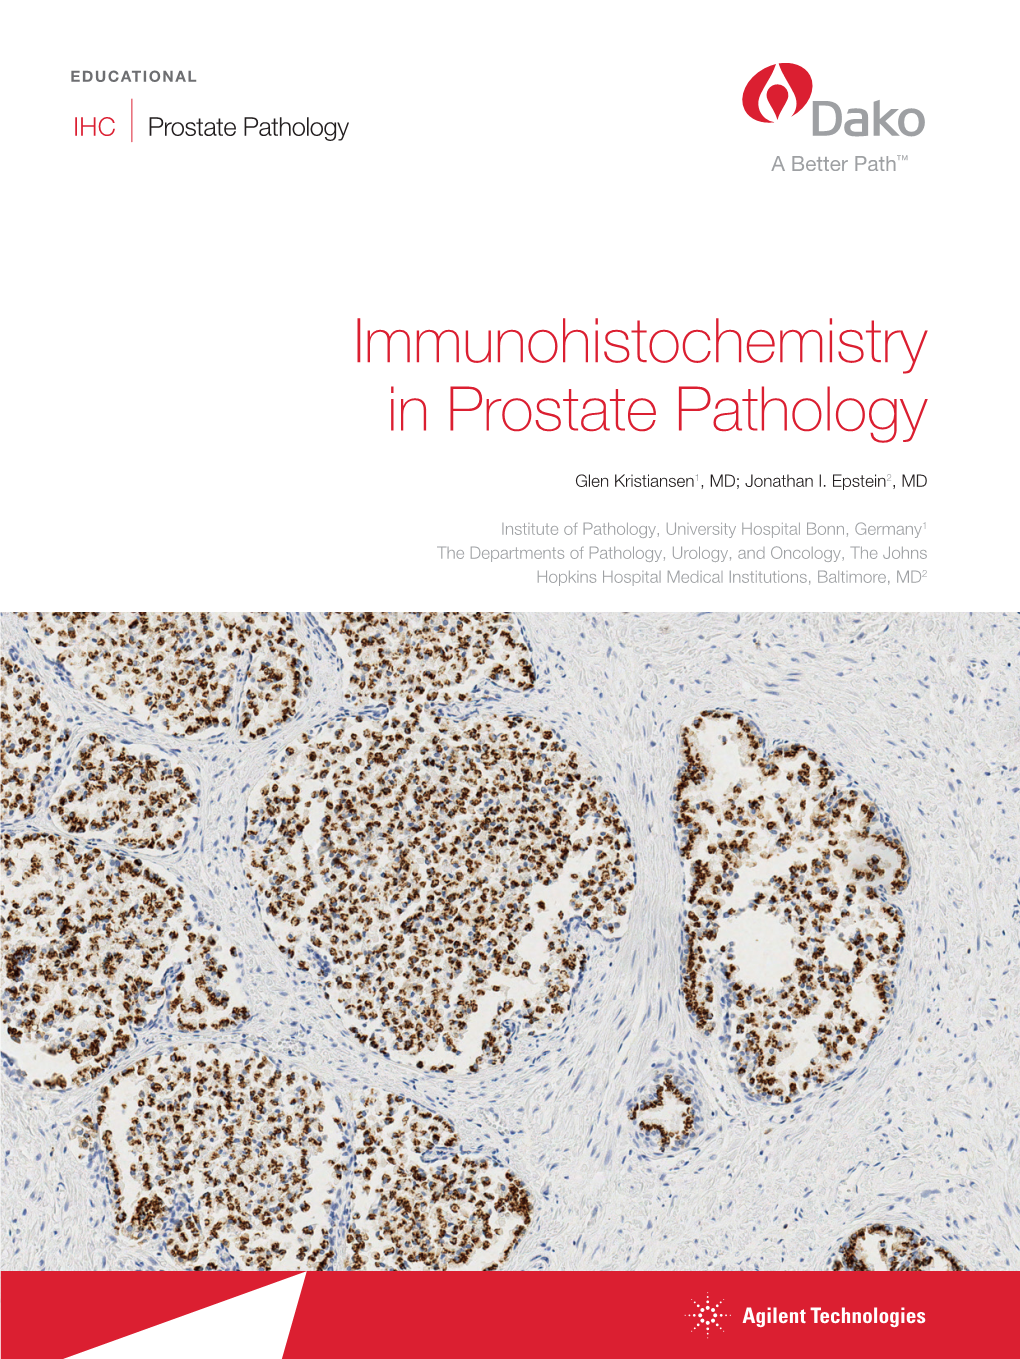 Immunohistochemistry in Prostate Pathology Review